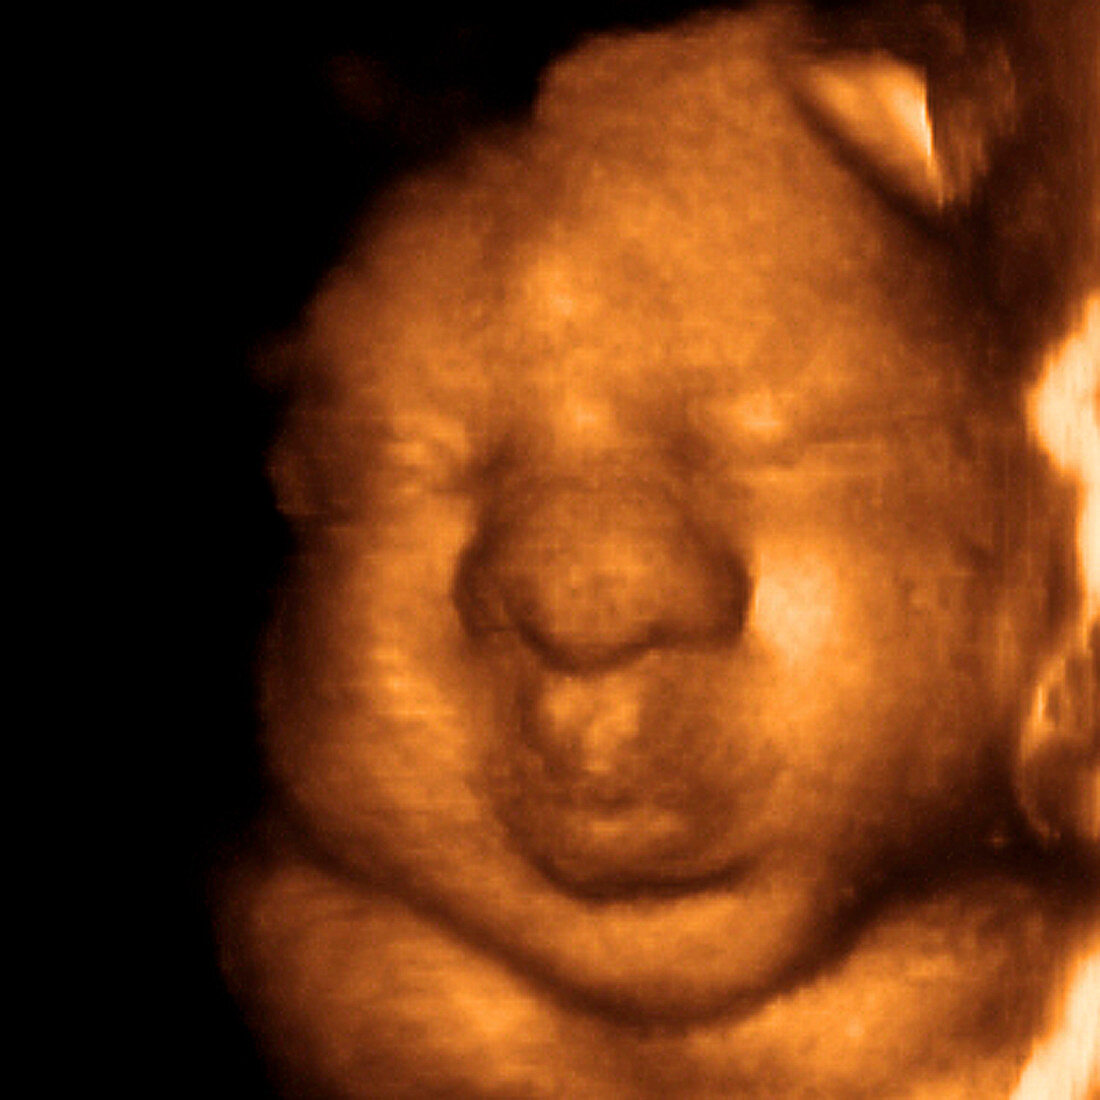 Foetus' face,3-D ultrasound scan